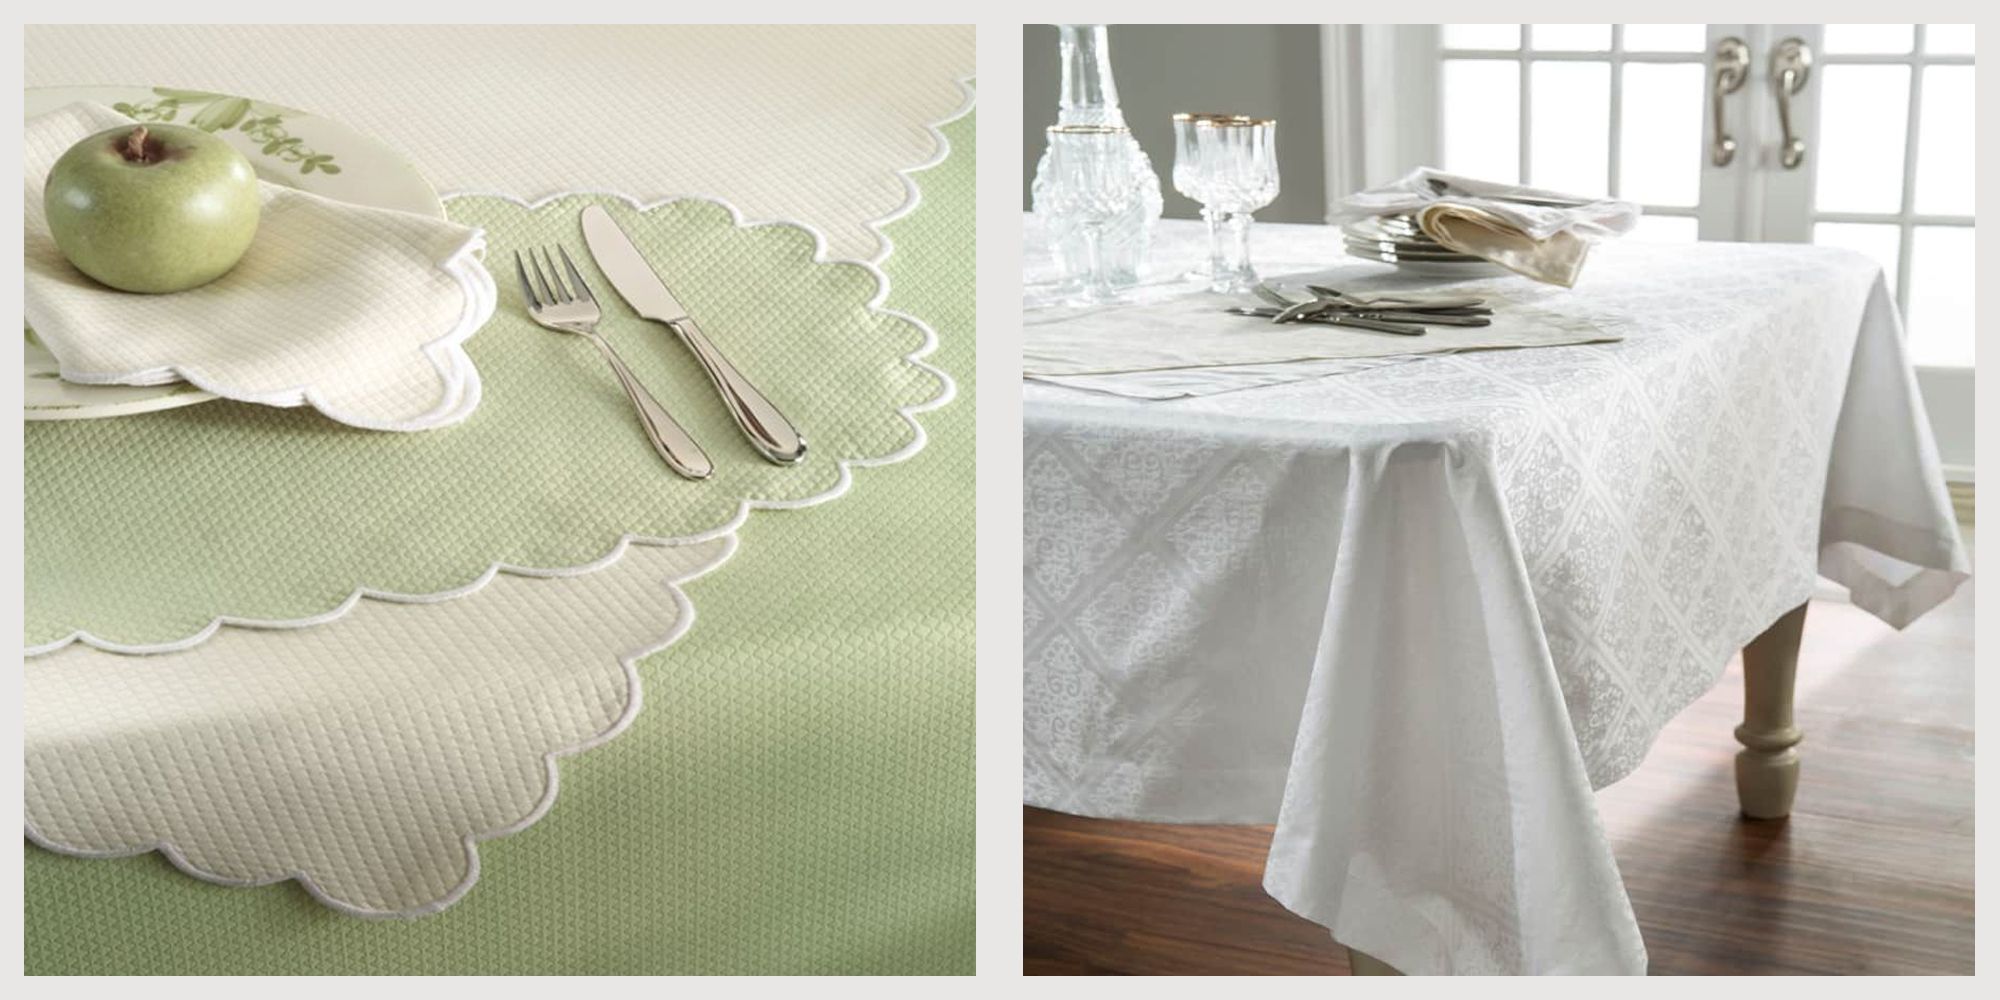 8 decorative edge cloth napkins set fabric dinner table linens lot